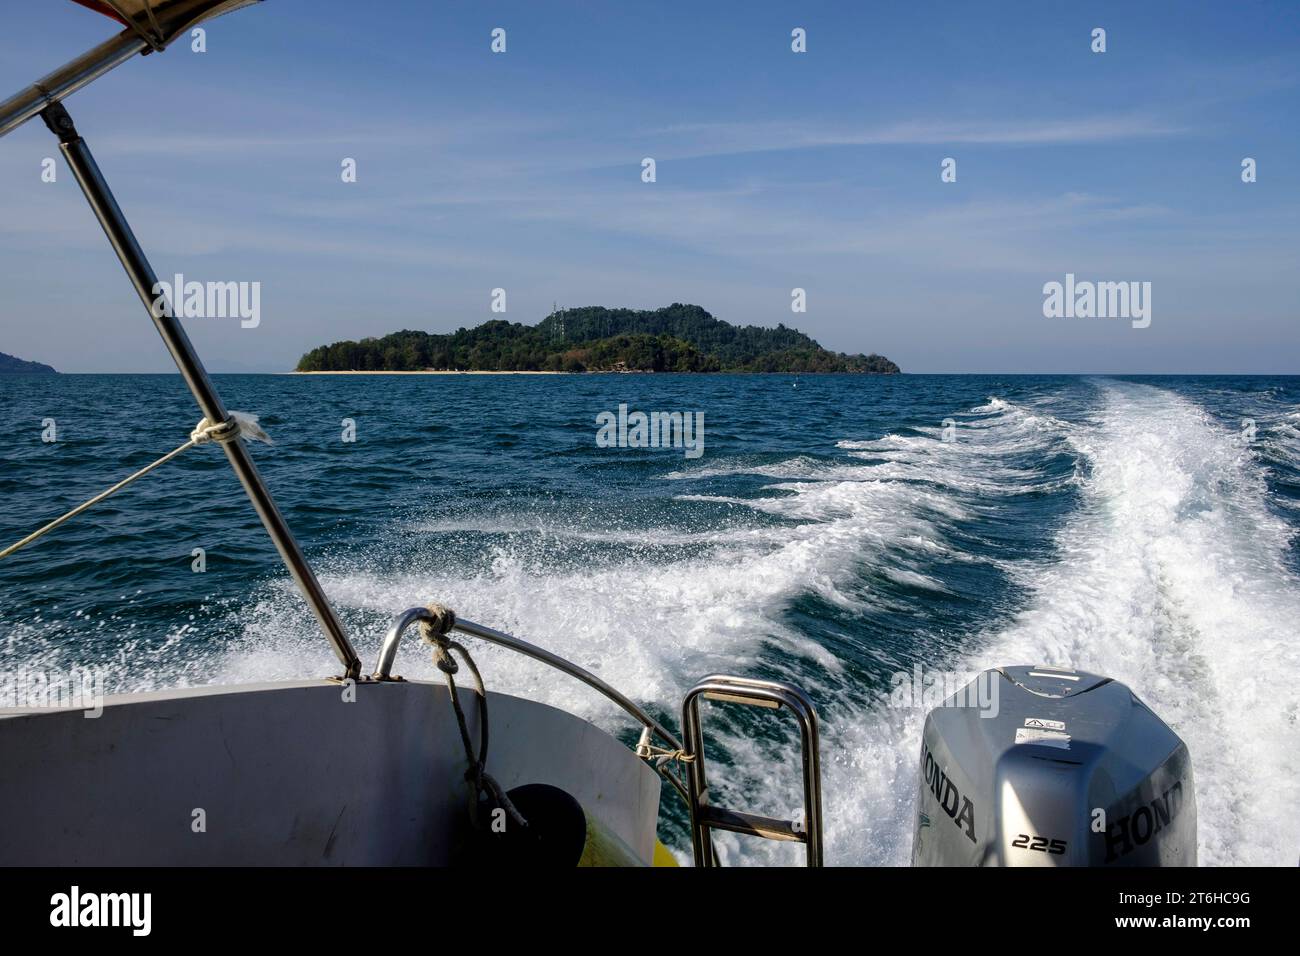 Der Honda Aussenbord-Motor des Speedboat - Koh Bulon le - Thailandia, Januar 2020 *** il motore fuoribordo Honda del motoscafo Koh Bulon le Thailand, gennaio 2020 credito: Imago/Alamy Live News Foto Stock